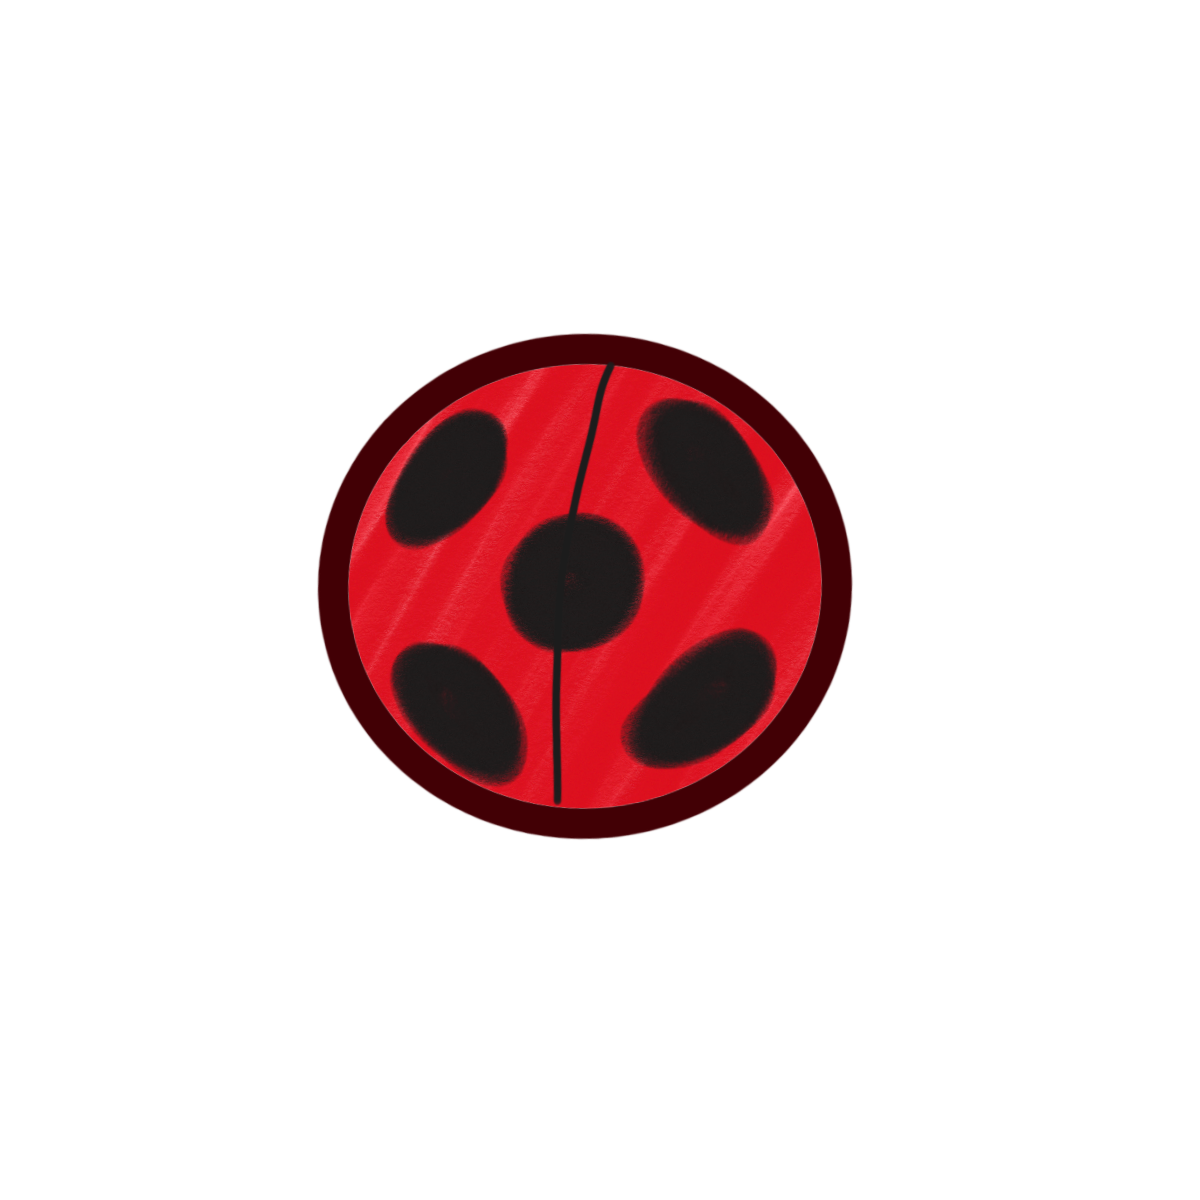 Miraculous Ladybug logo